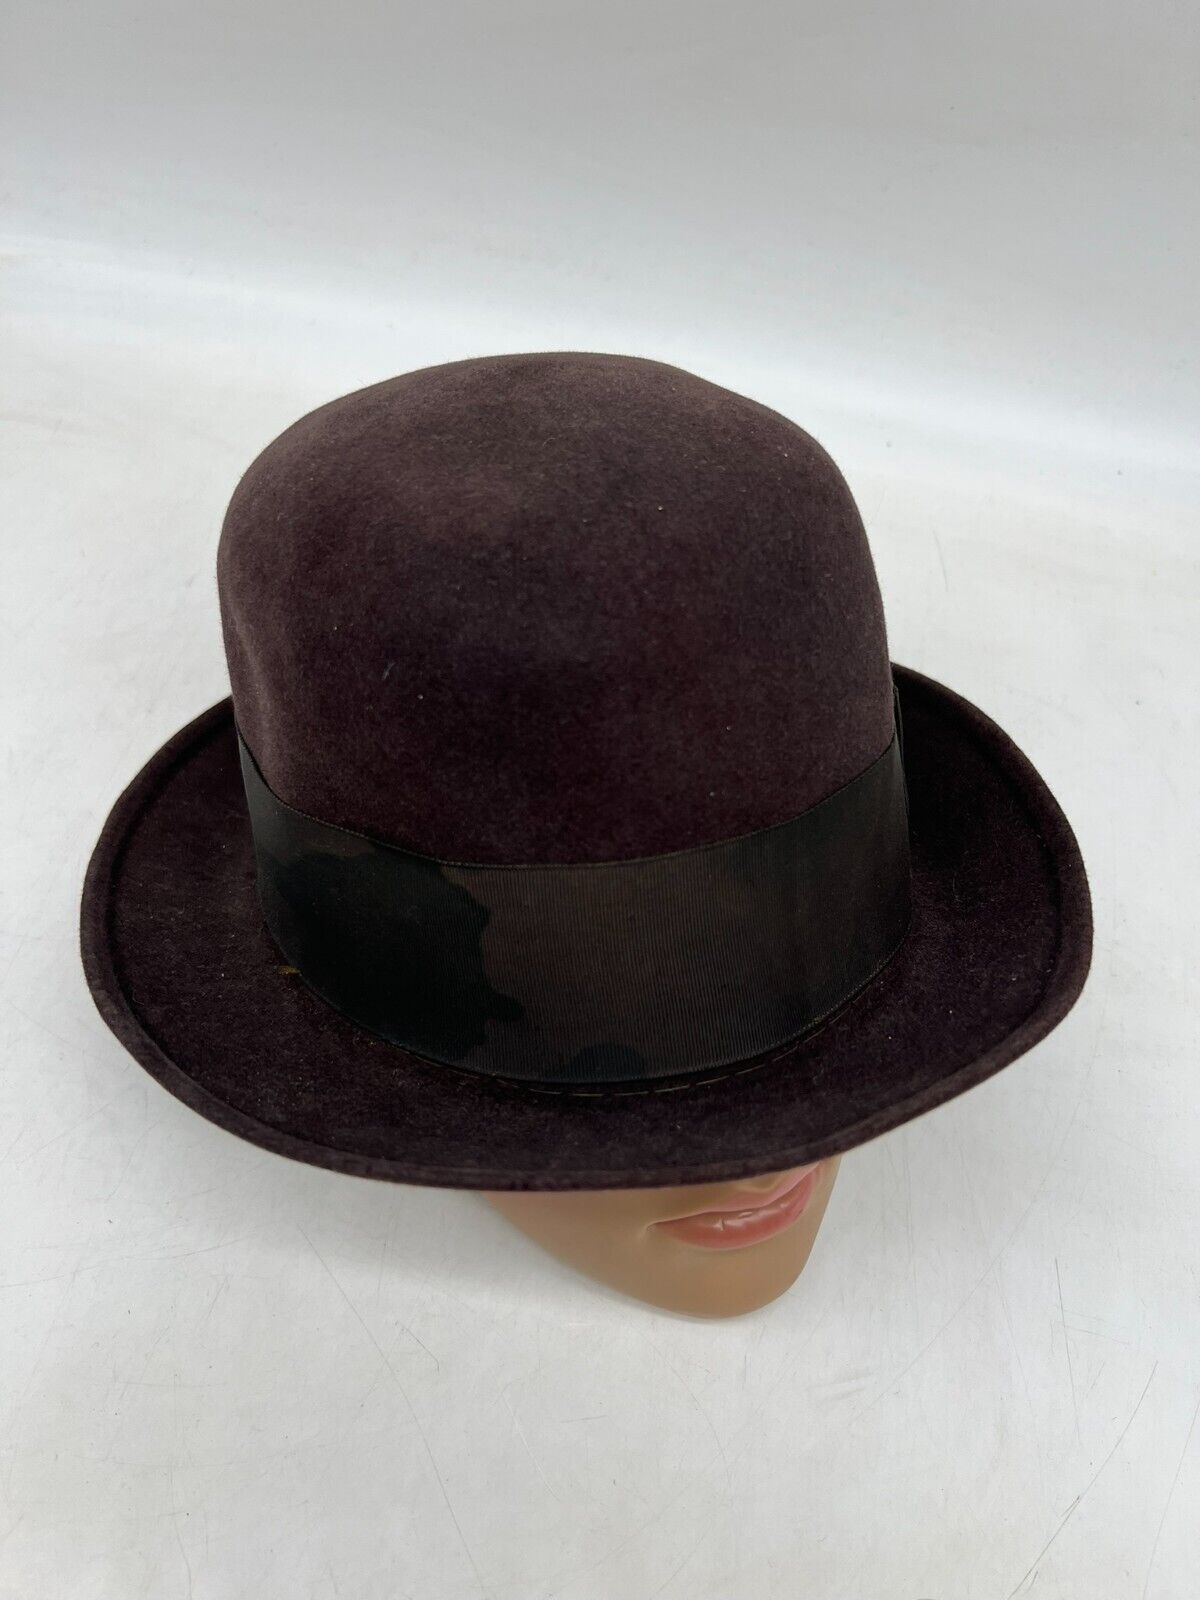 Vintage Keens British Waterproof Bowler Hat Size 7 1/2 Brown Equestrian Show Hat